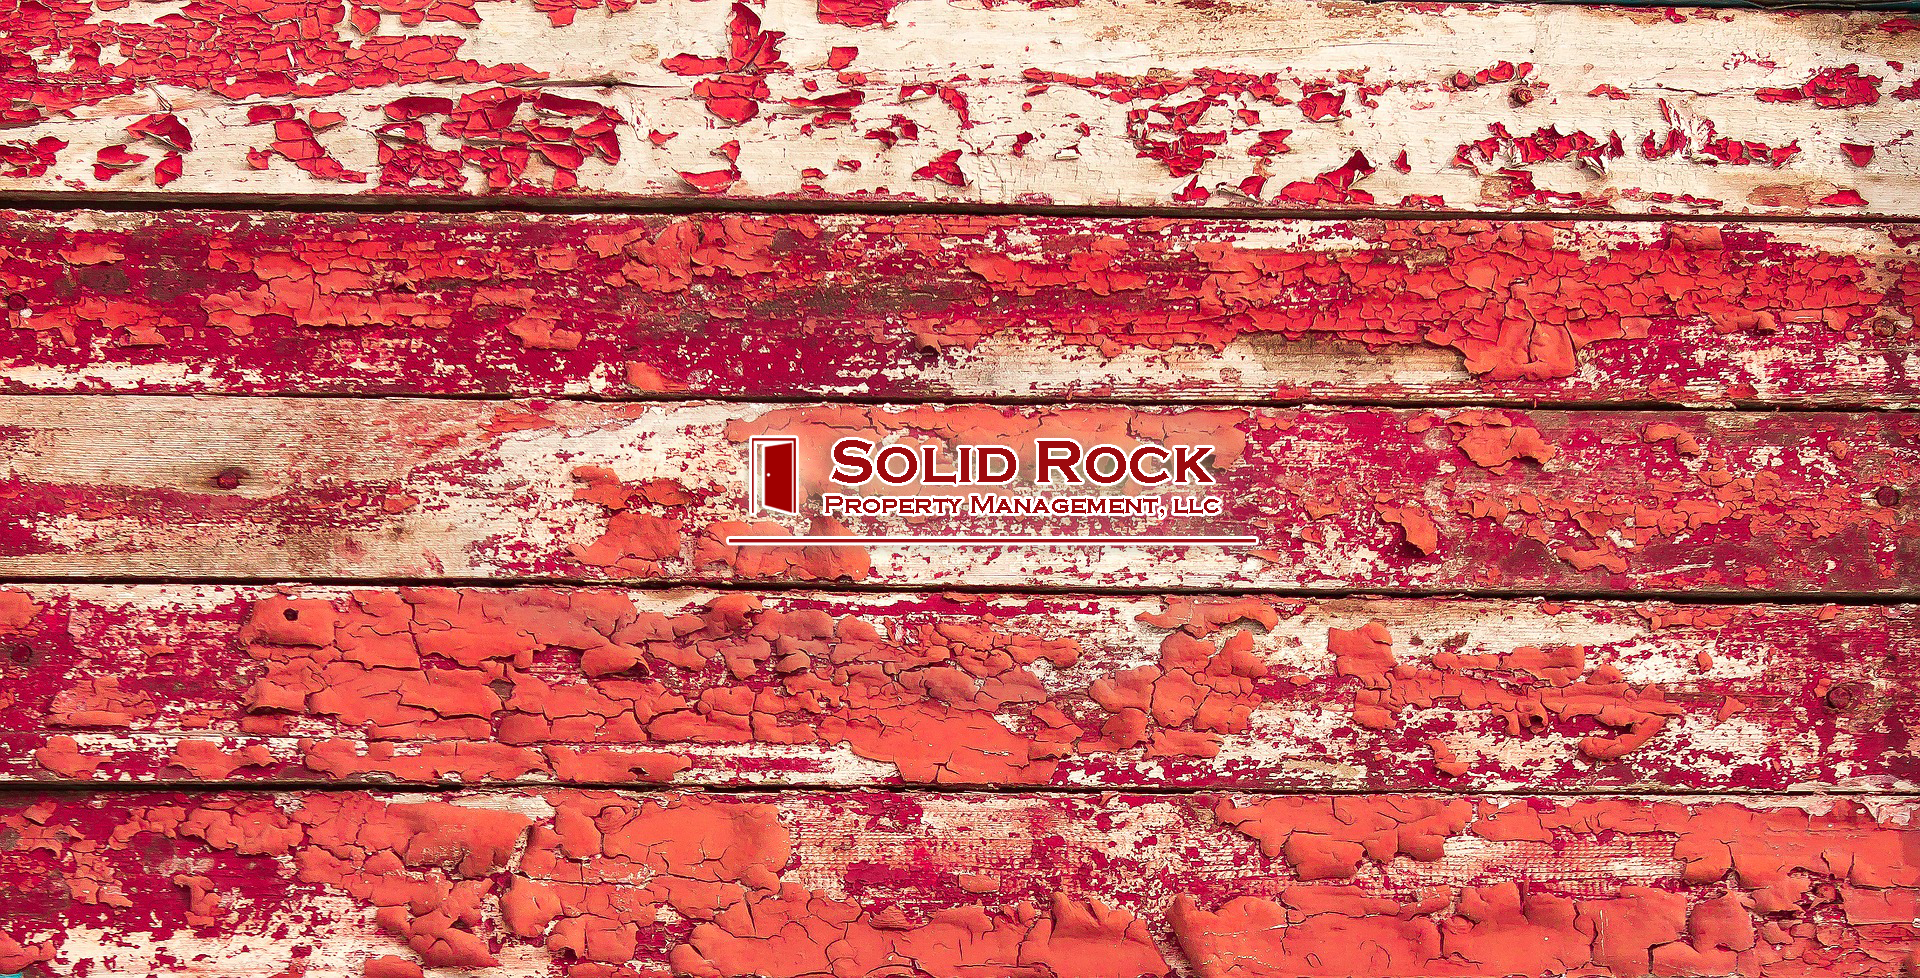 Solid Rock Property Management, LLC